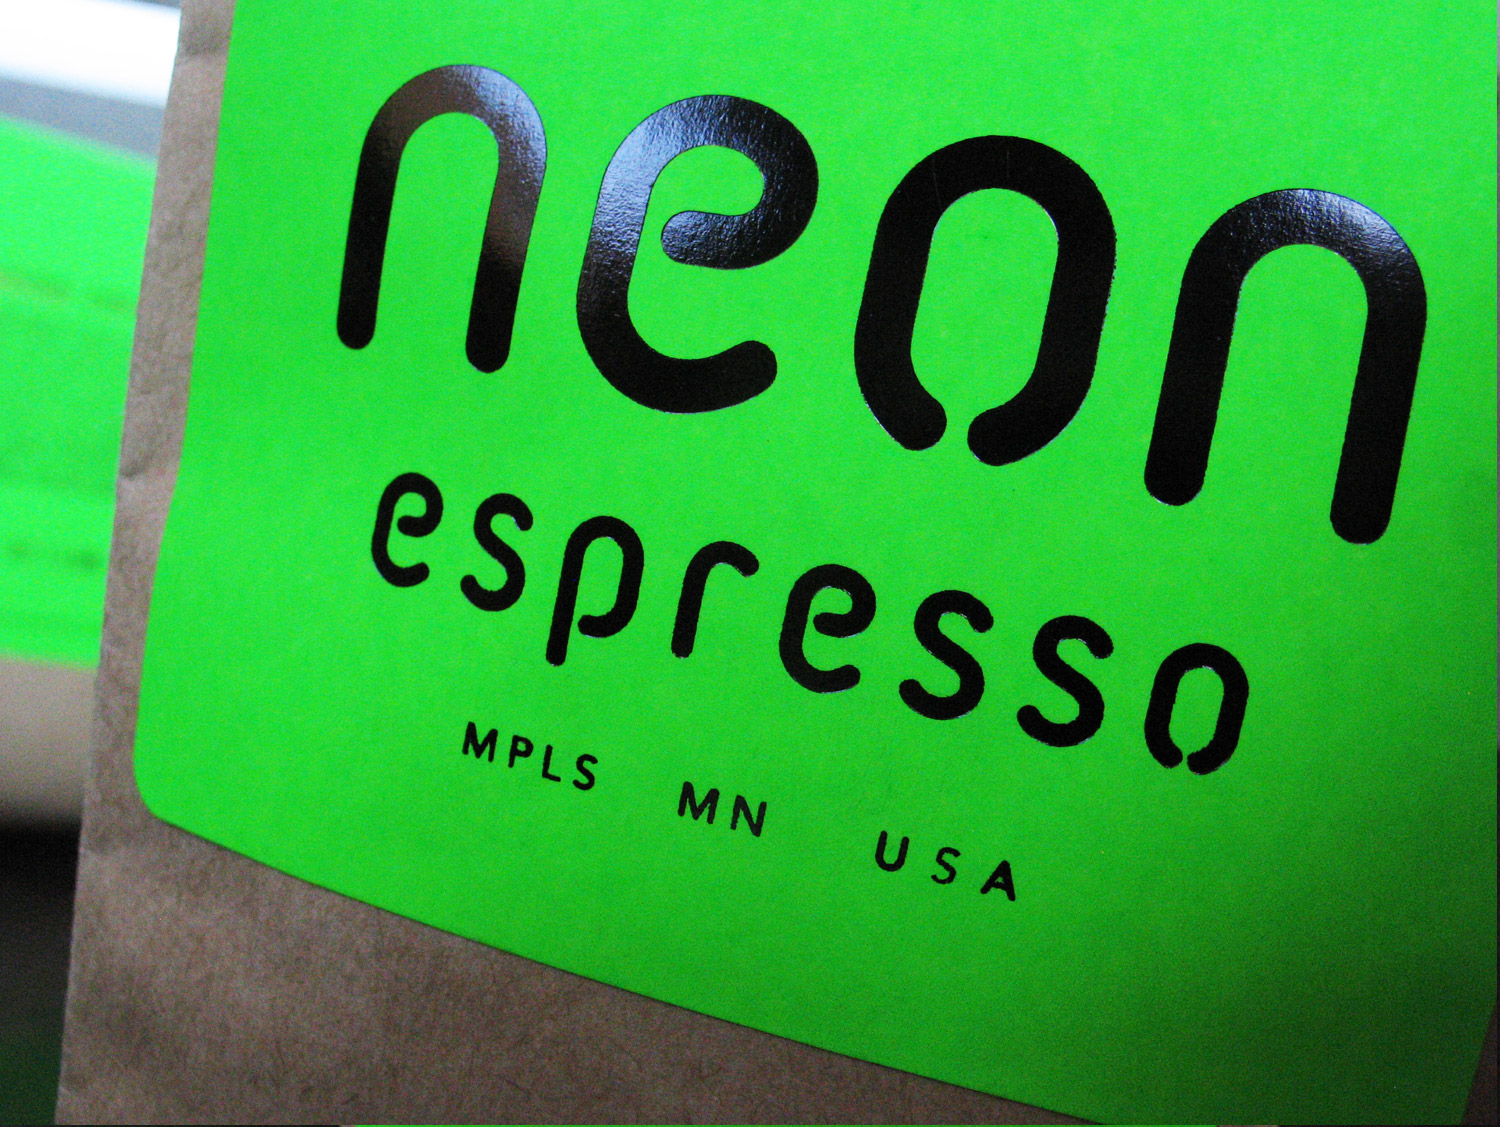 Dogwood-Coffee-Neon-Espresso-Packaging-02.jpg